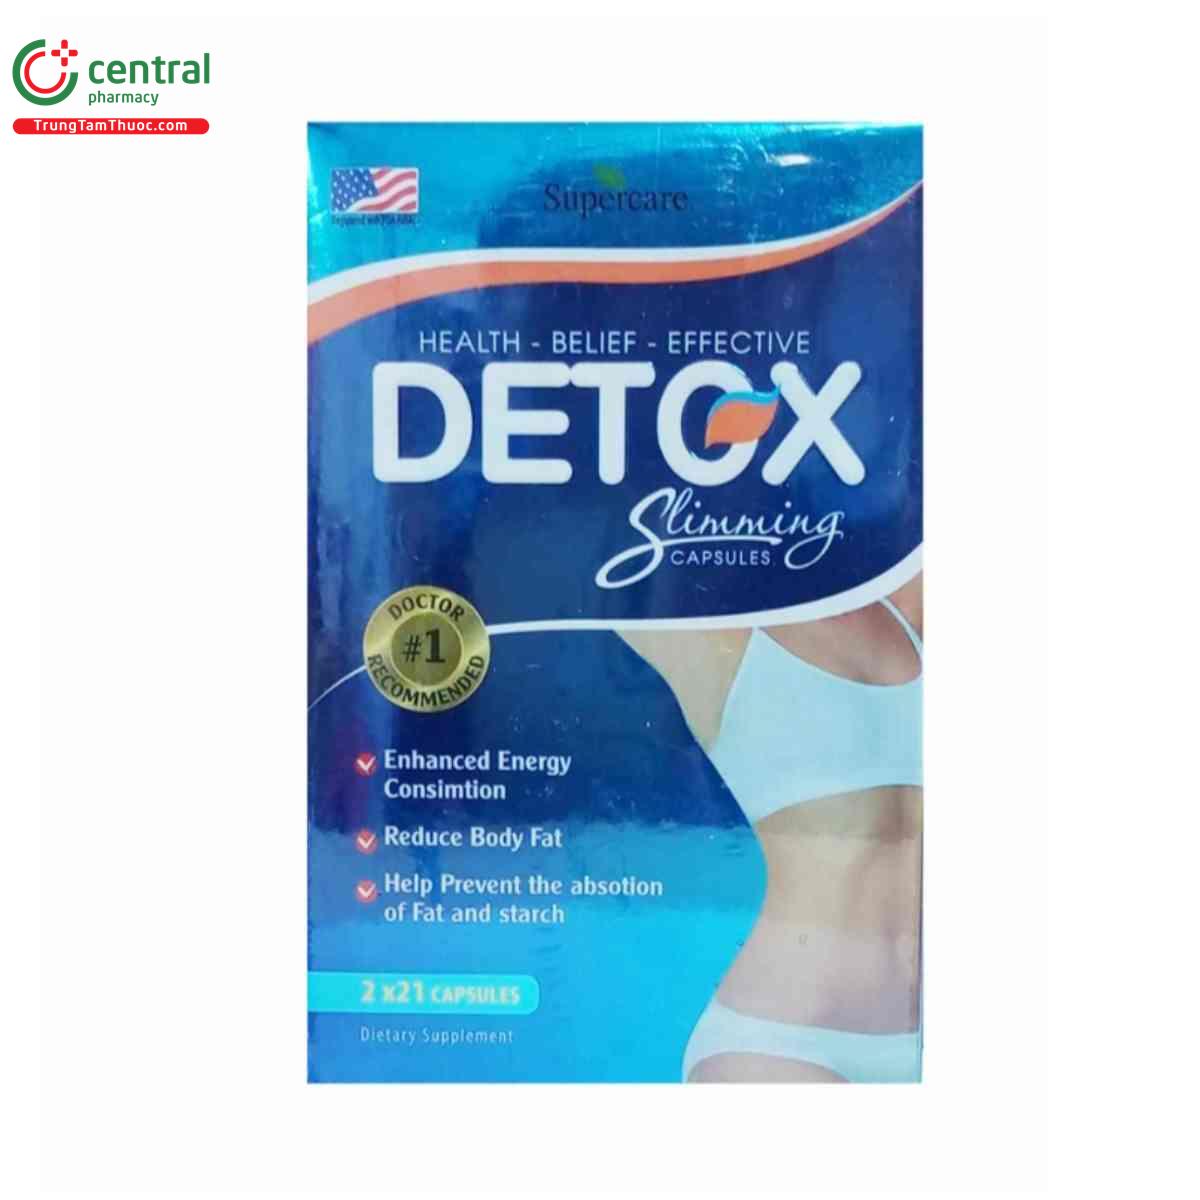 detox slimming capsules 2 I3120